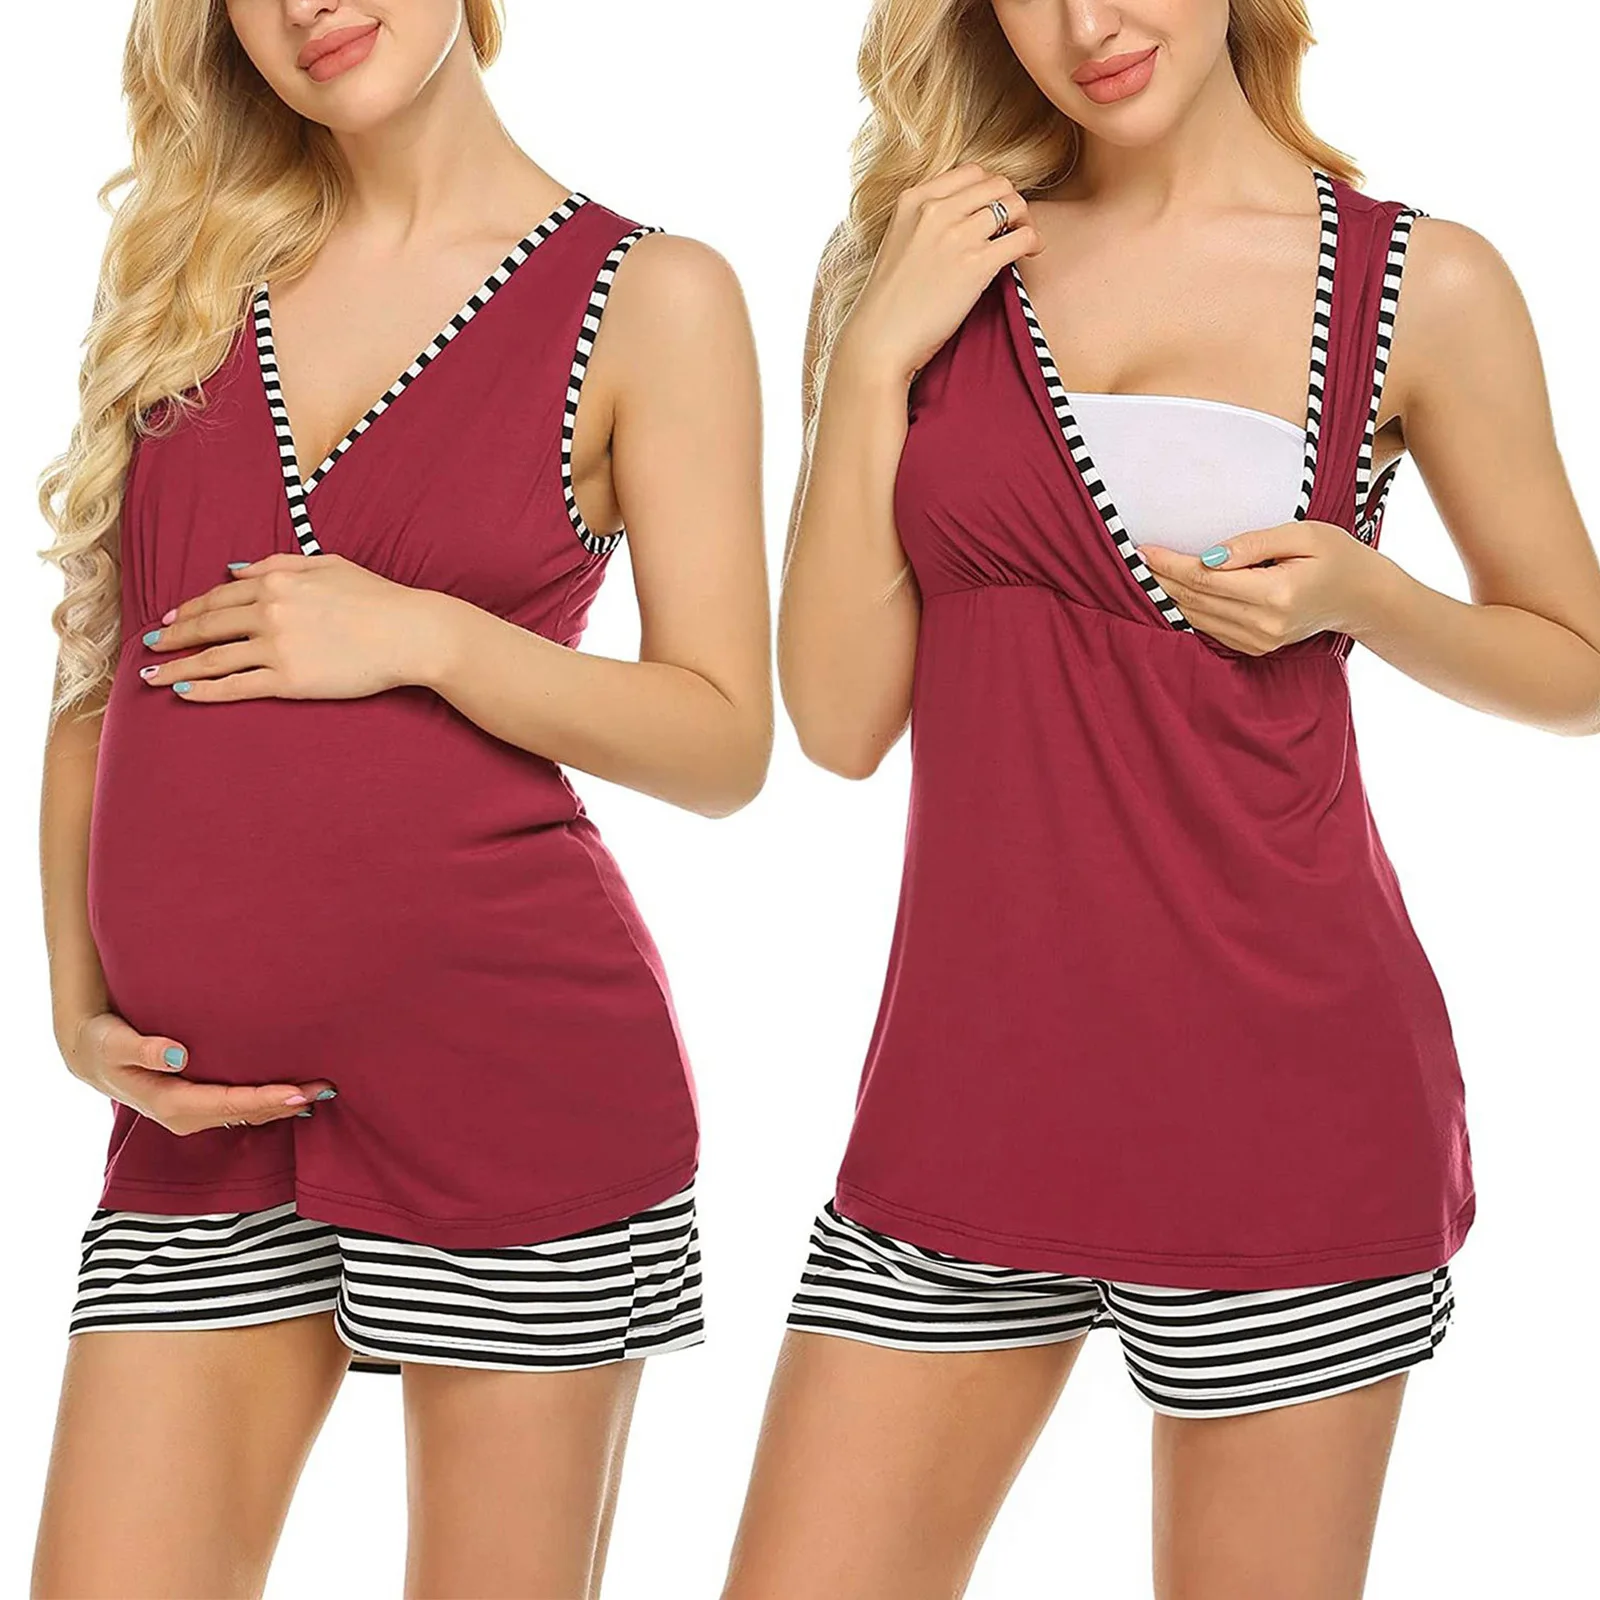 Maternity Nightwear Pregnant Women Casual Clothes Set Sleeveless V-Neck Shirt Tops Shorts Set Pyjamas for Nursing Breastfeeding